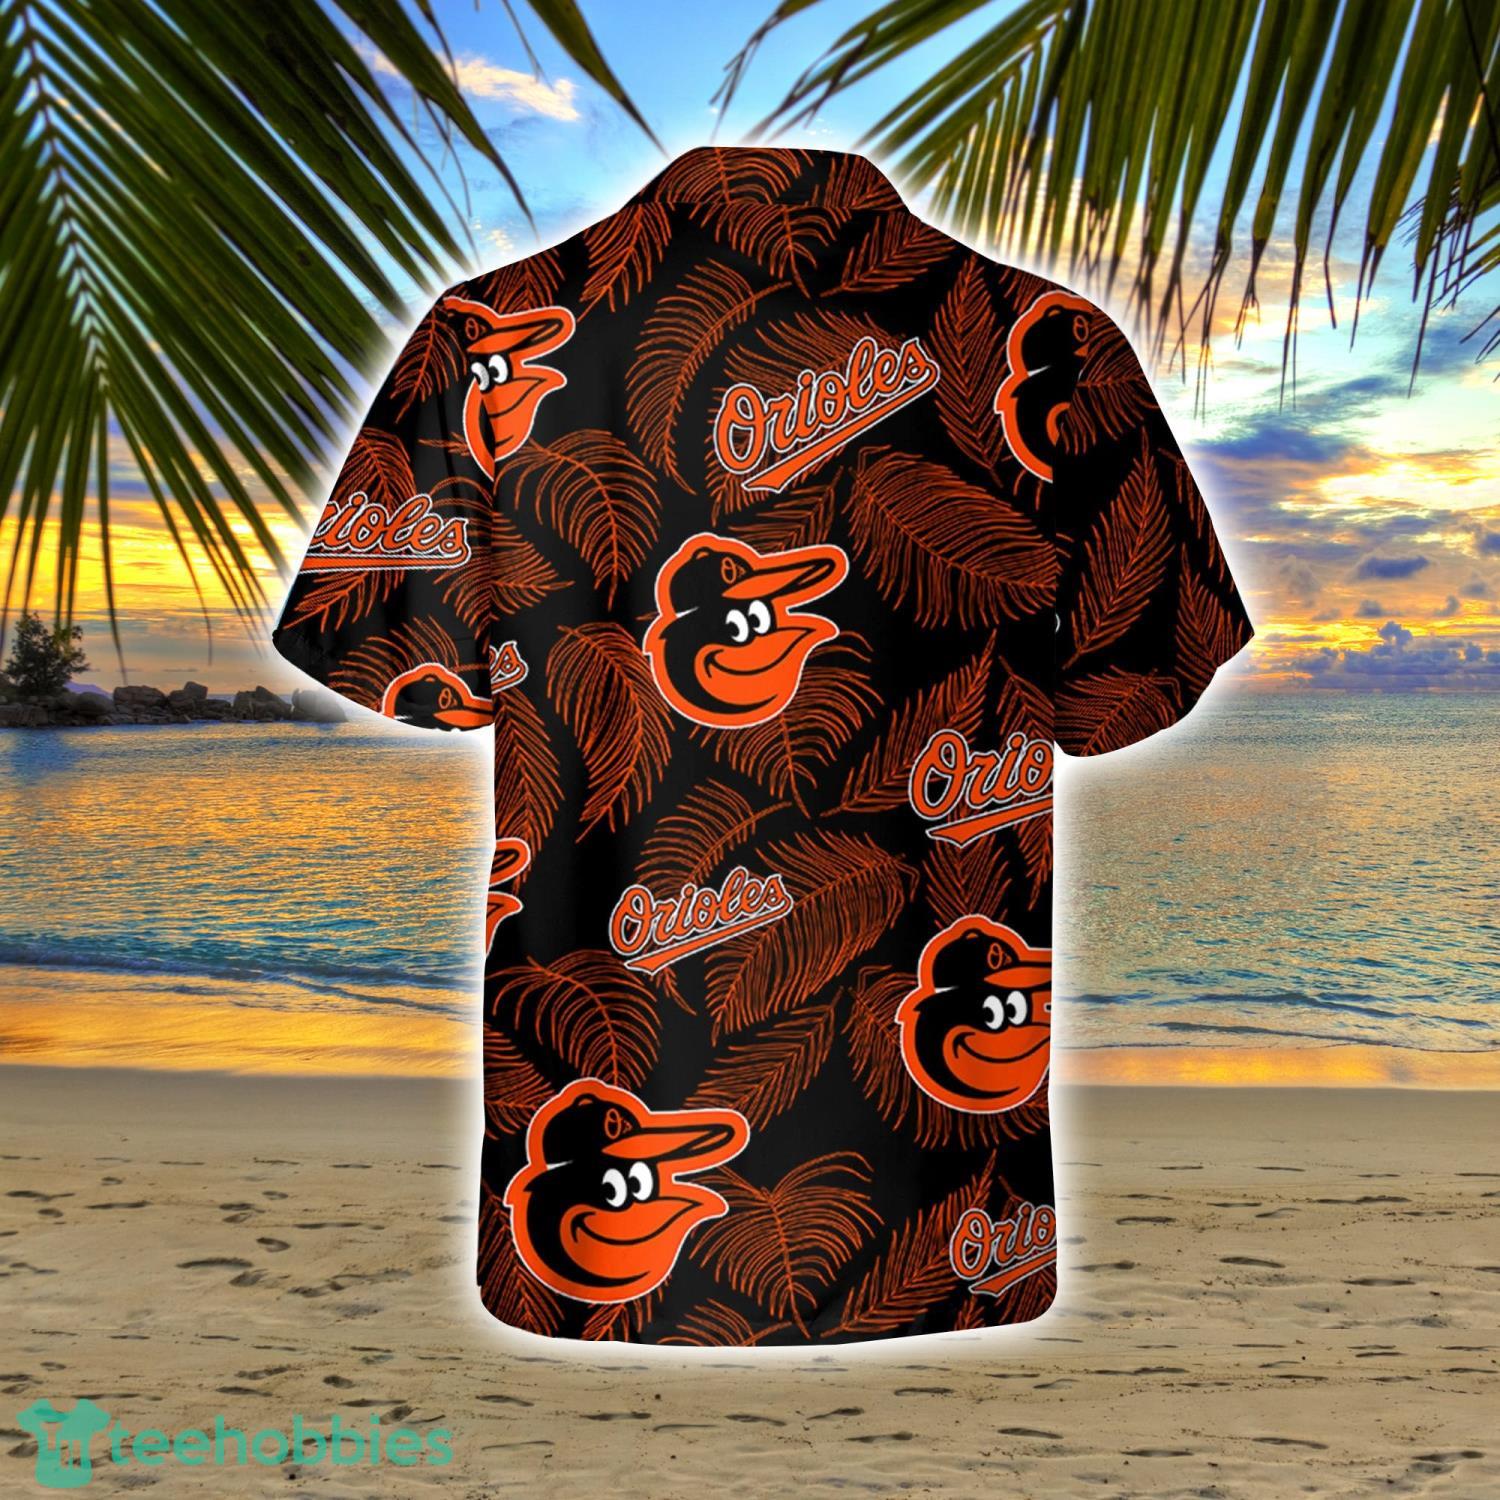 Baltimore Orioles Hawaiian Shirt, Sketch Palm Leaves Seamless